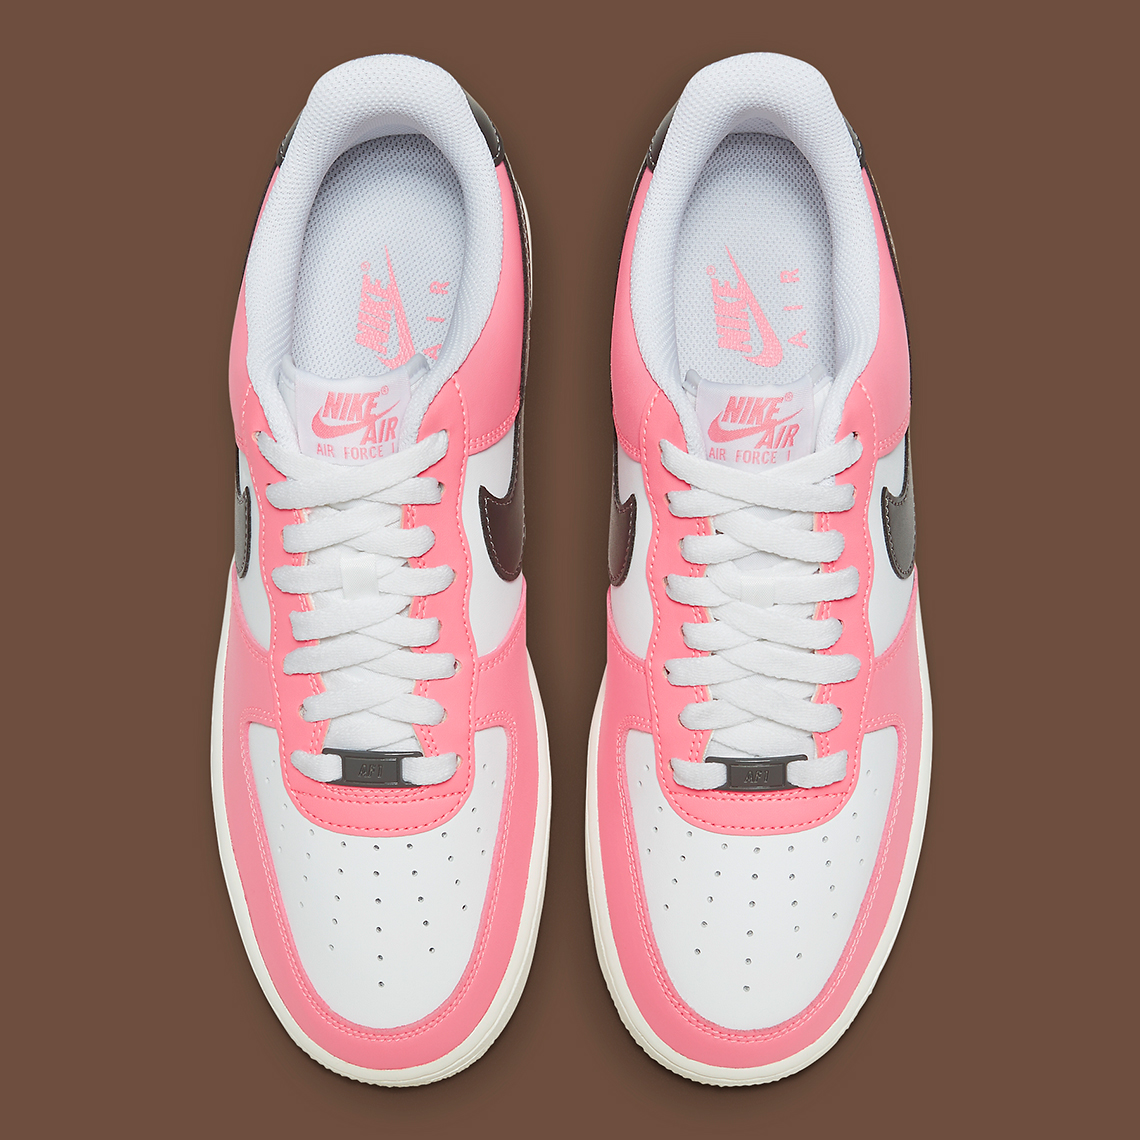 Nike Air Force 1 Low Pink Brown Fq6850 621 2